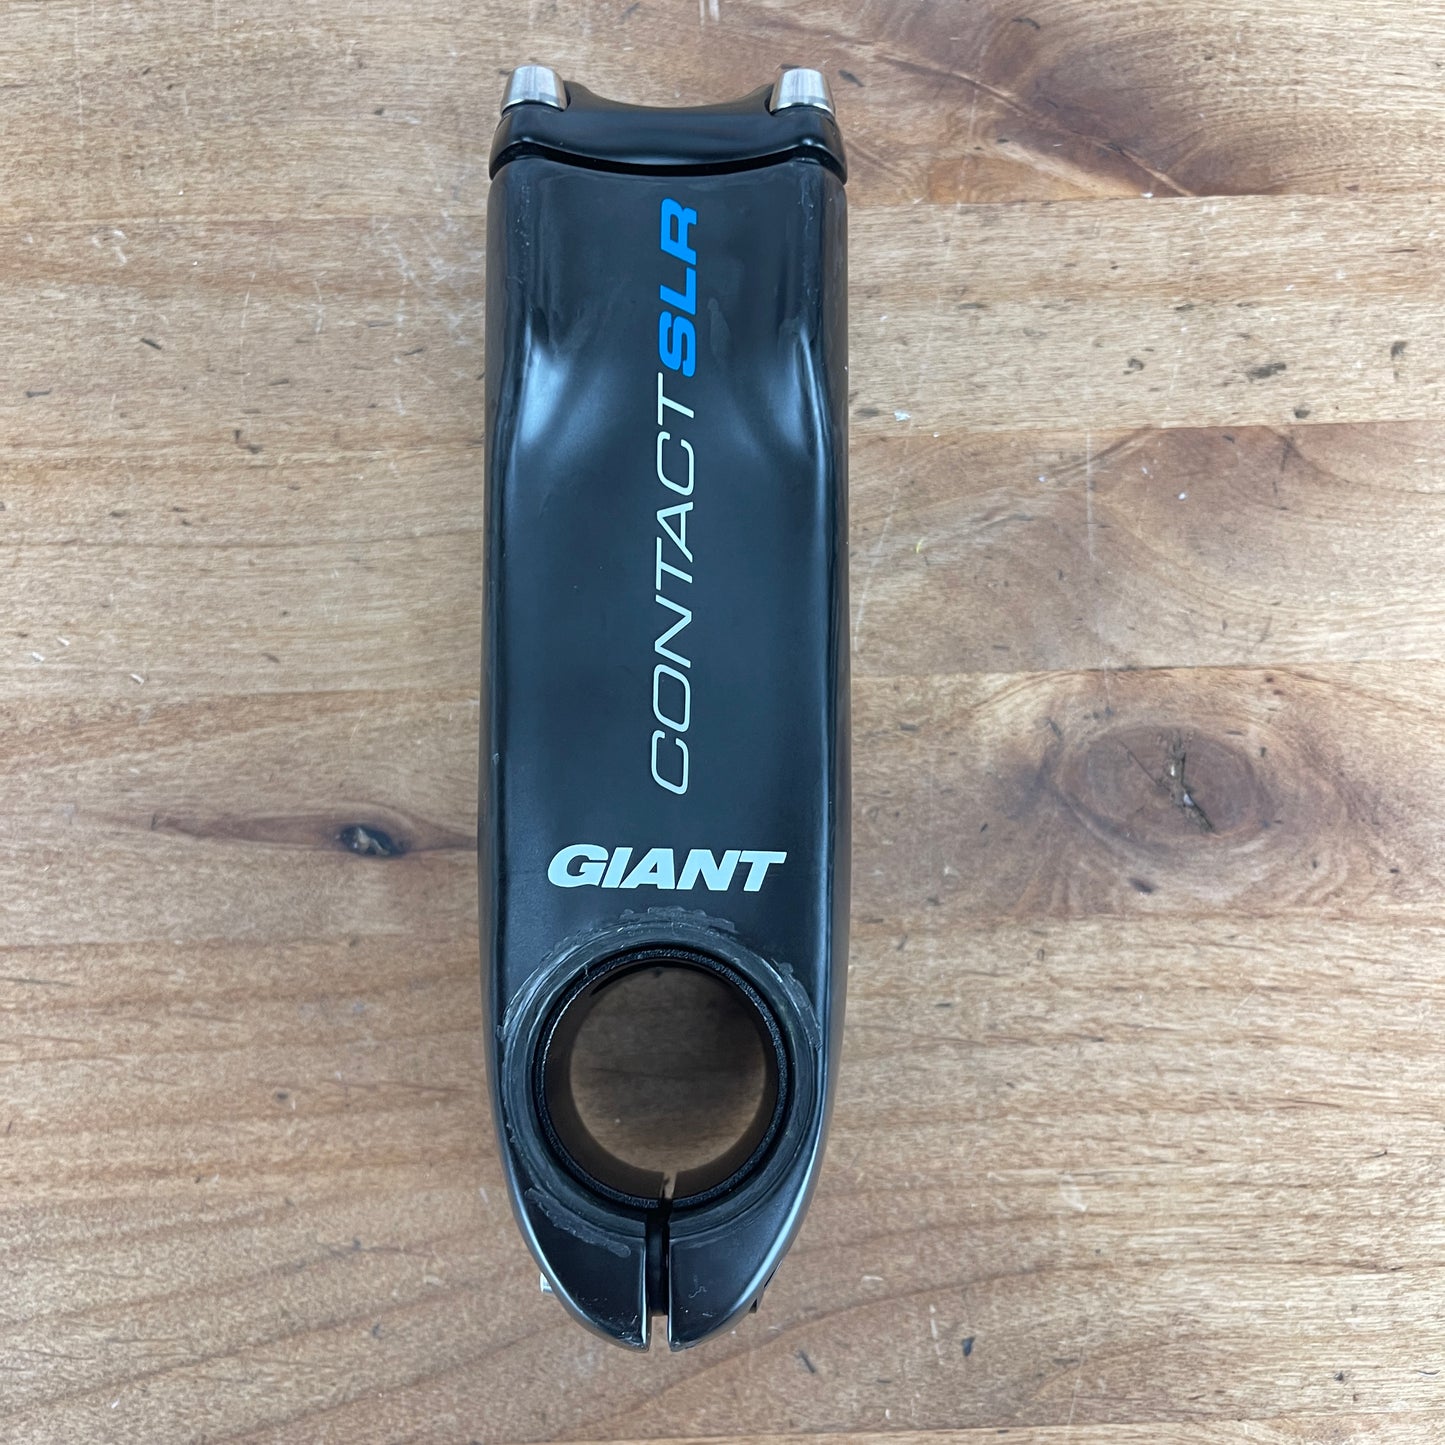 Giant Contact SLR 110mm -8 Degree OD1 & OD2 Compatible 1 1/4" Carbon Bike Stem